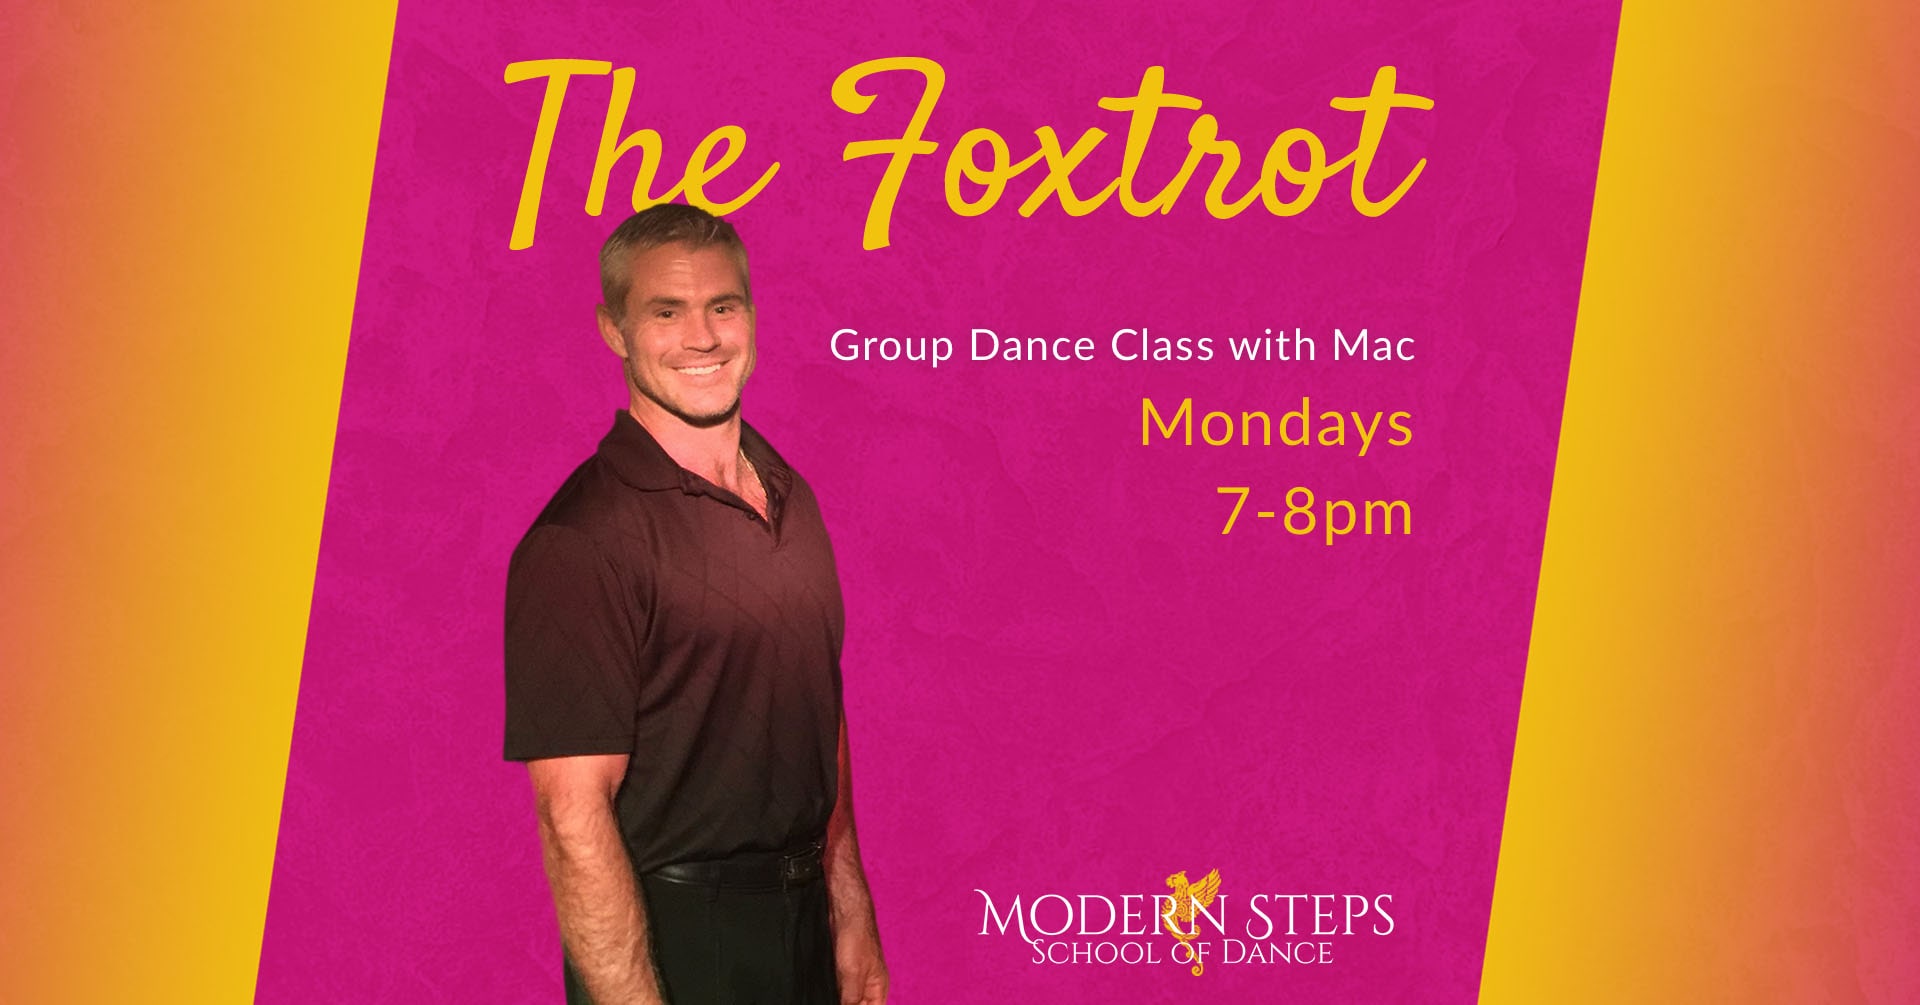 Modern Steps School of Dance Naples Florida The Foxtrot Dance Classes - Group Ballroom Dance Lessons - Naples Florida Things to Do